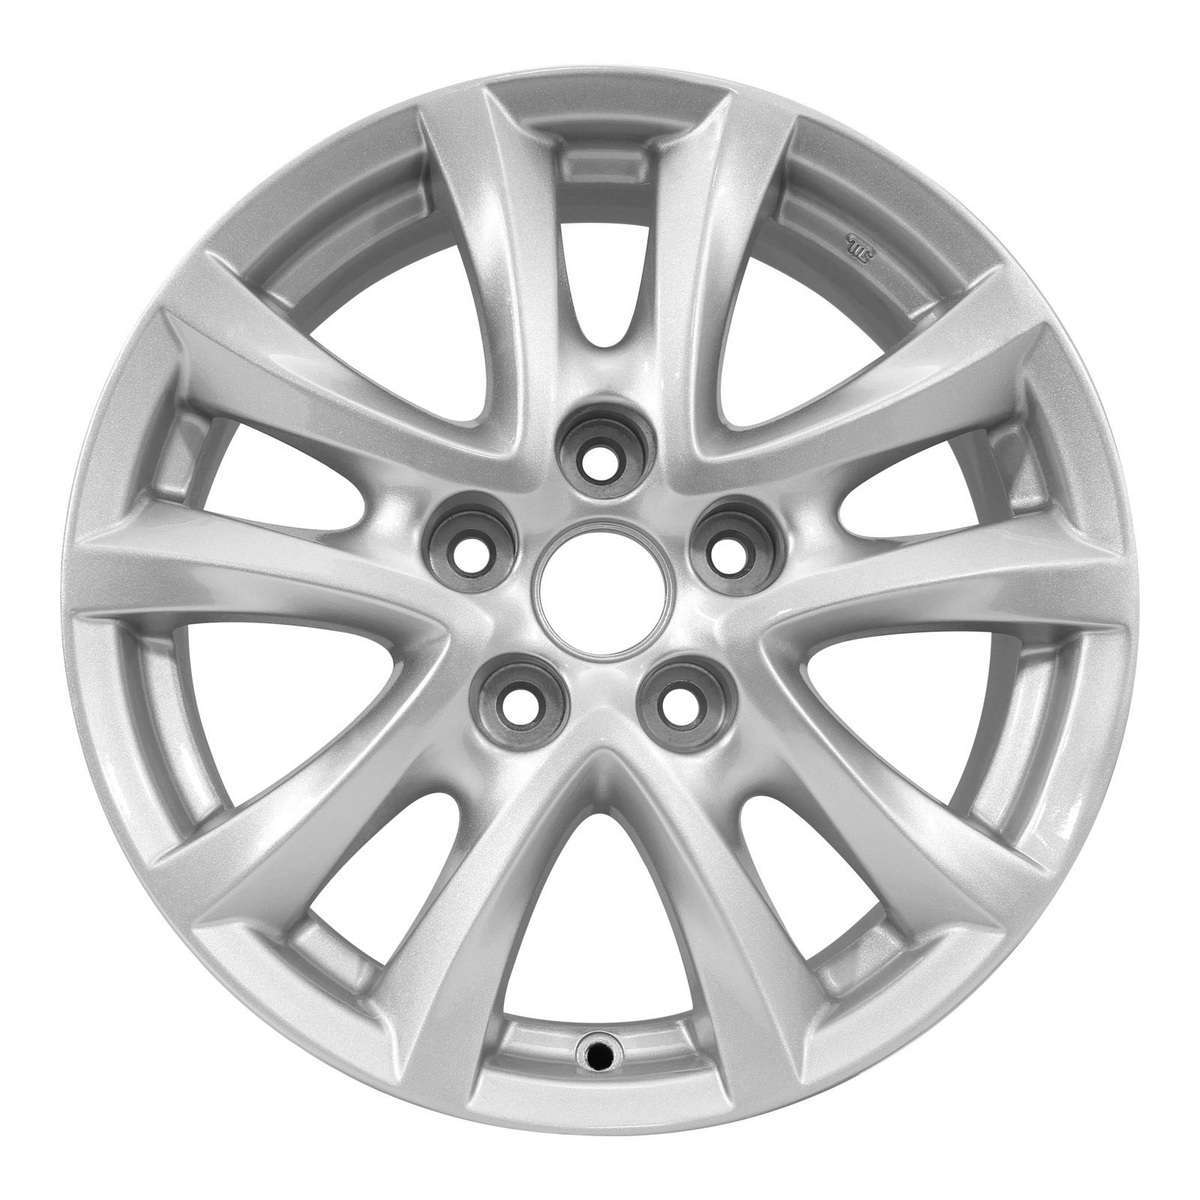 2017 Mazda 3 New 16" Replacement Wheel Rim RW64961S